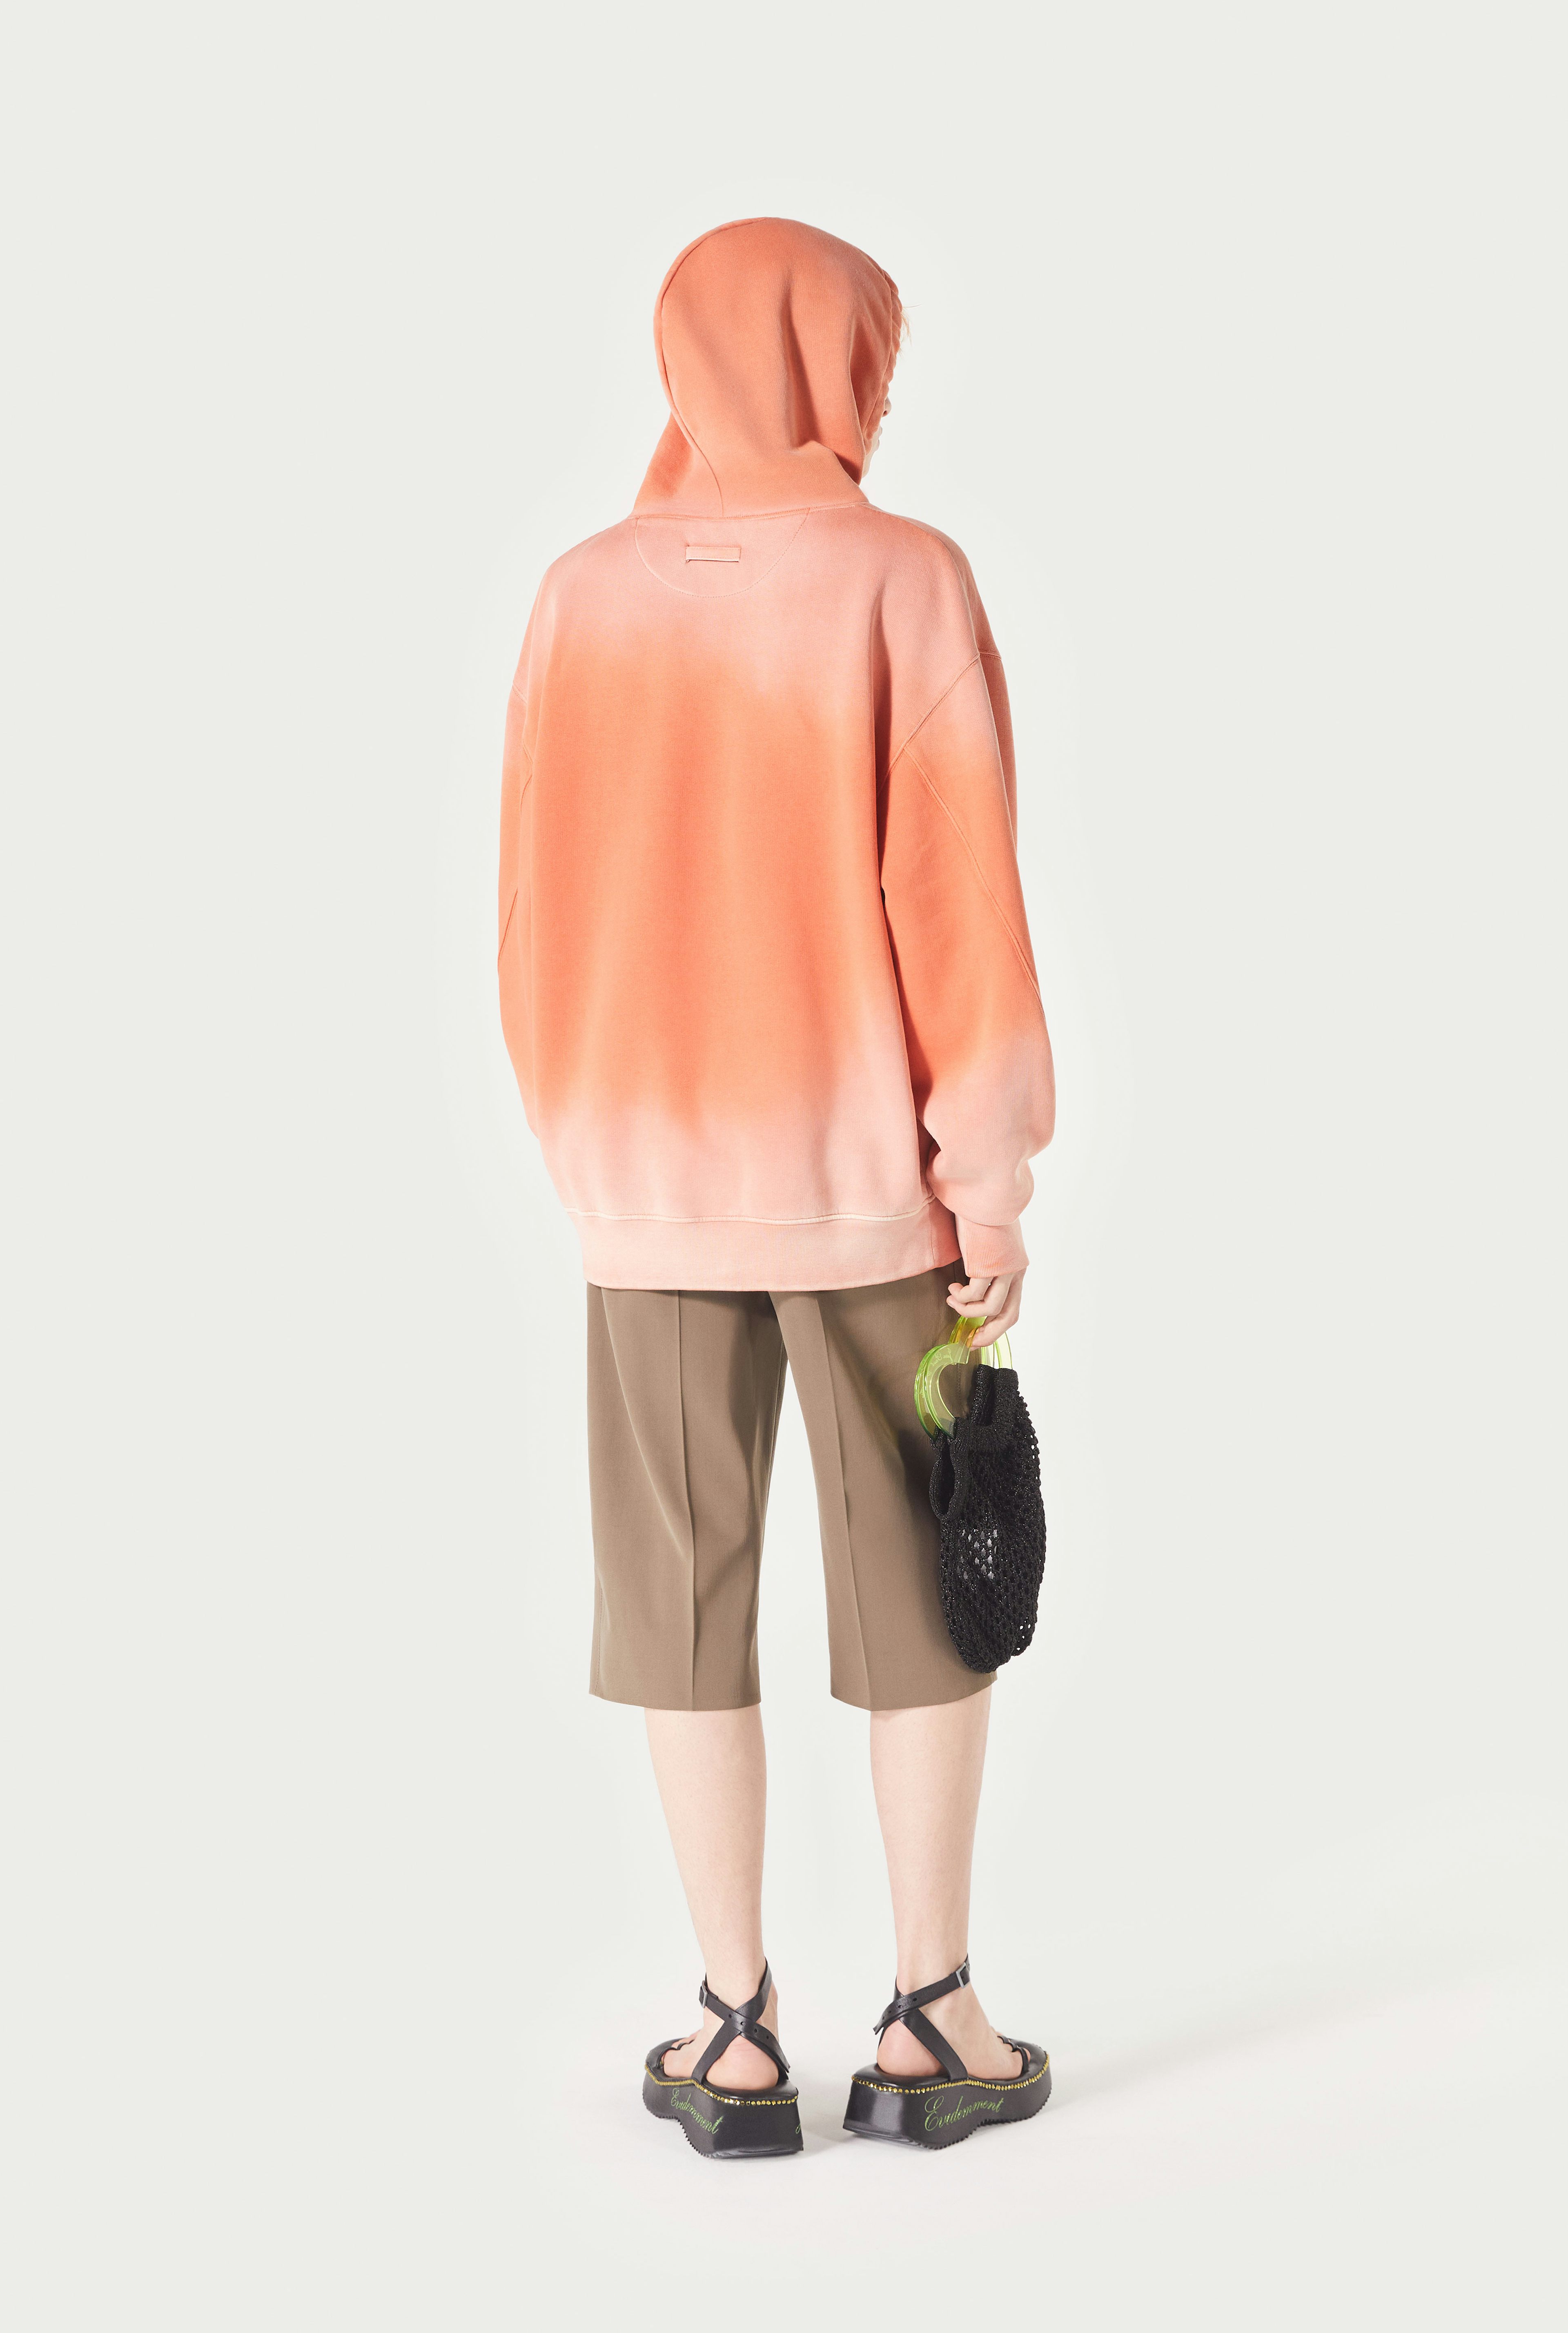 The Orange Hooded Évidemment Sweatshirt